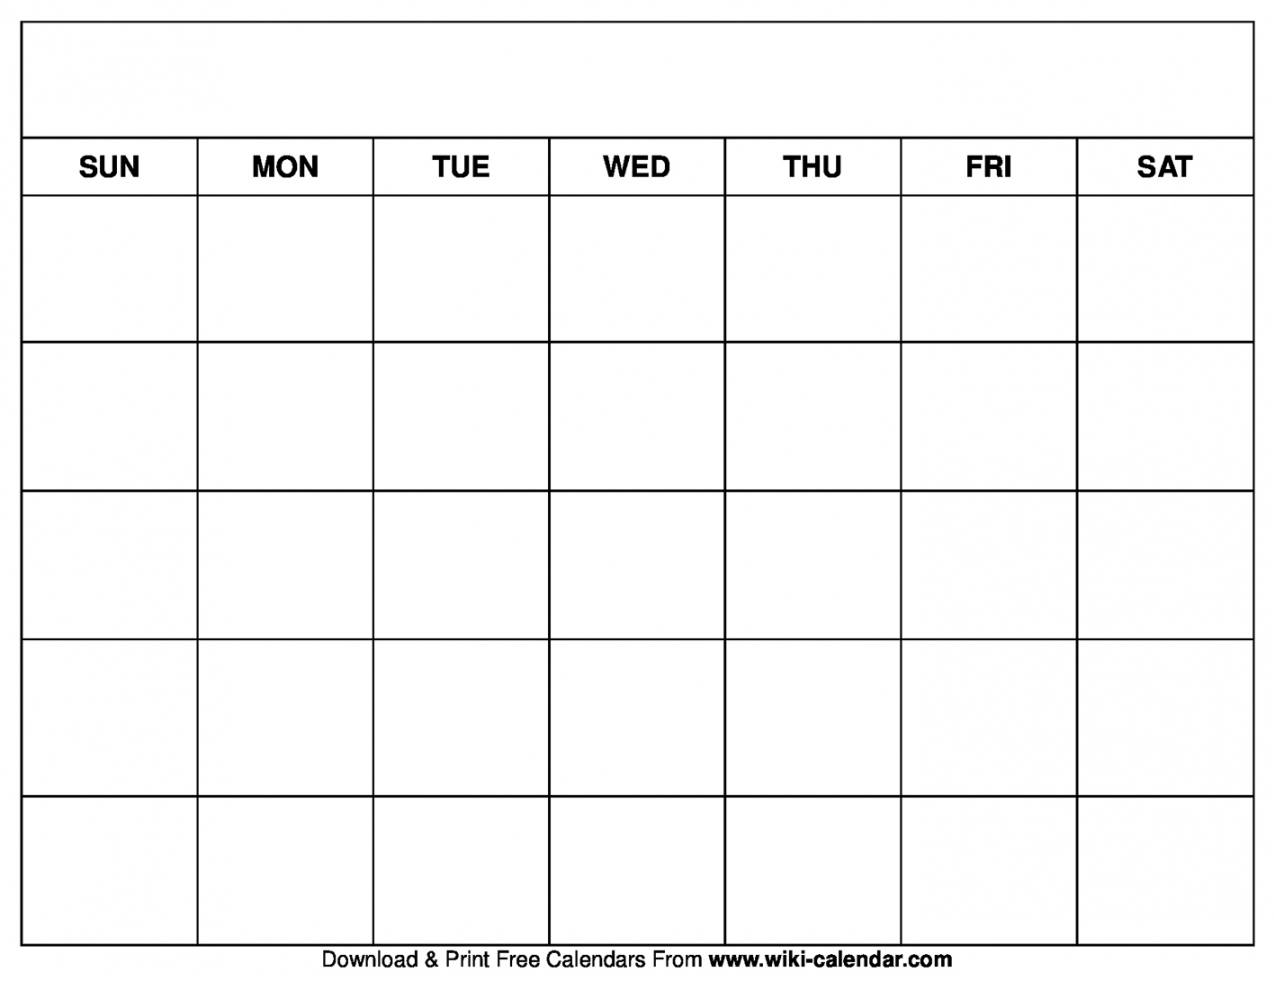 Free Printable Calendars Monthly - Printable - Printable Blank Calendar Templates - Wiki Calendar